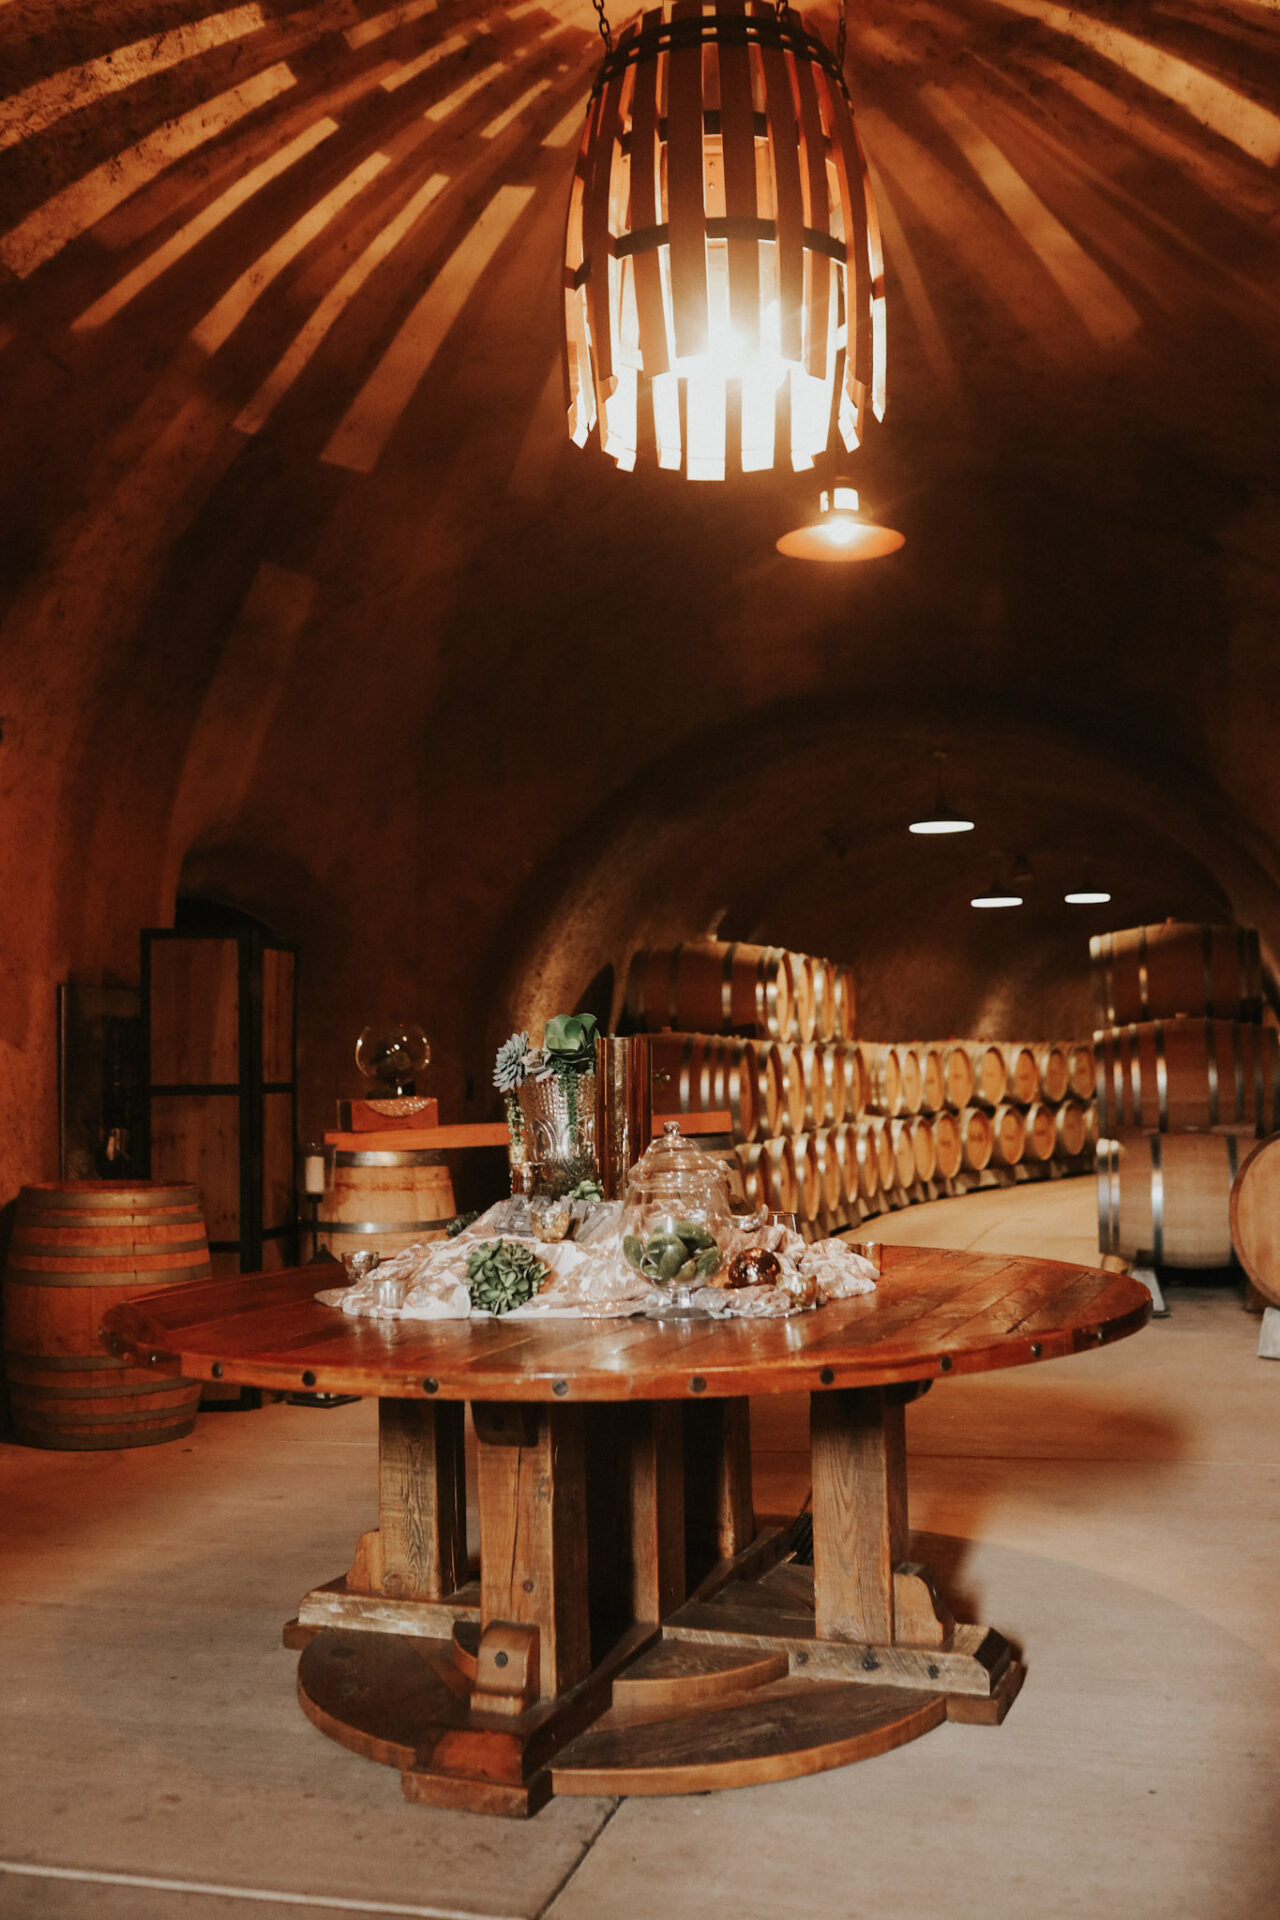 Helwig wine caves - Amador County Winery